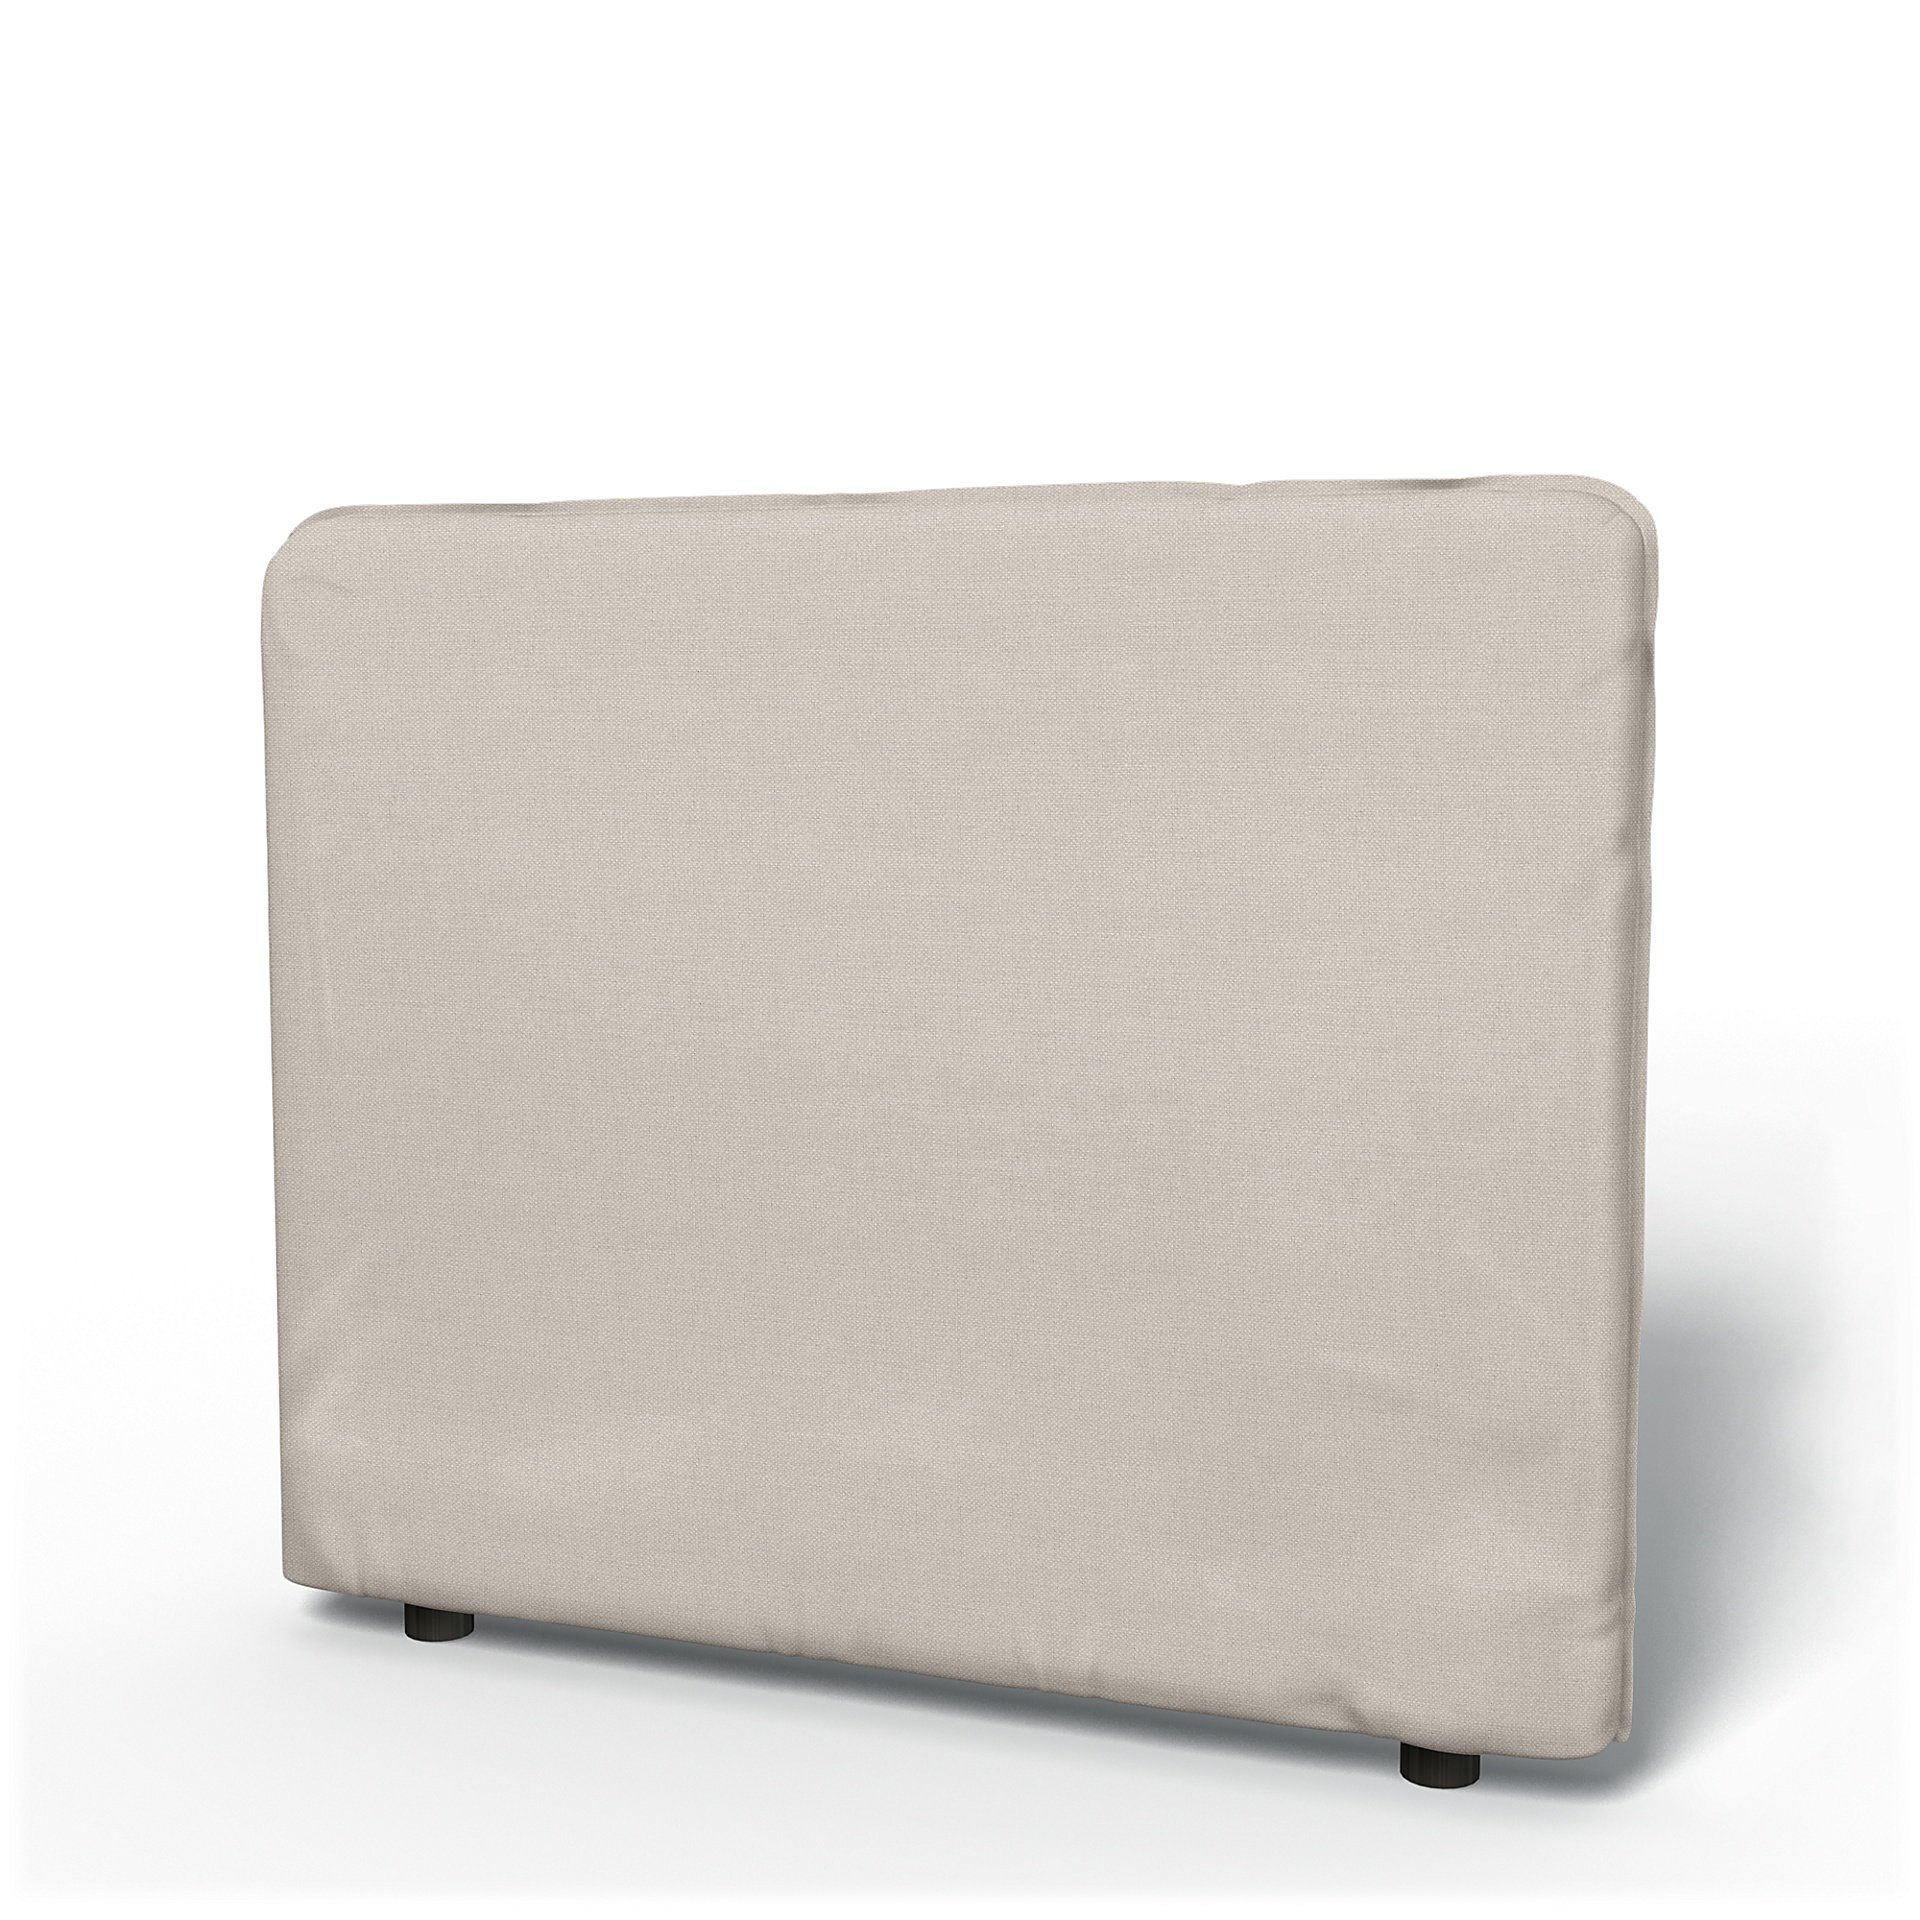 IKEA - Vallentuna Low Backrest Cover 100x80cm 39x32in, Chalk, Linen - Bemz